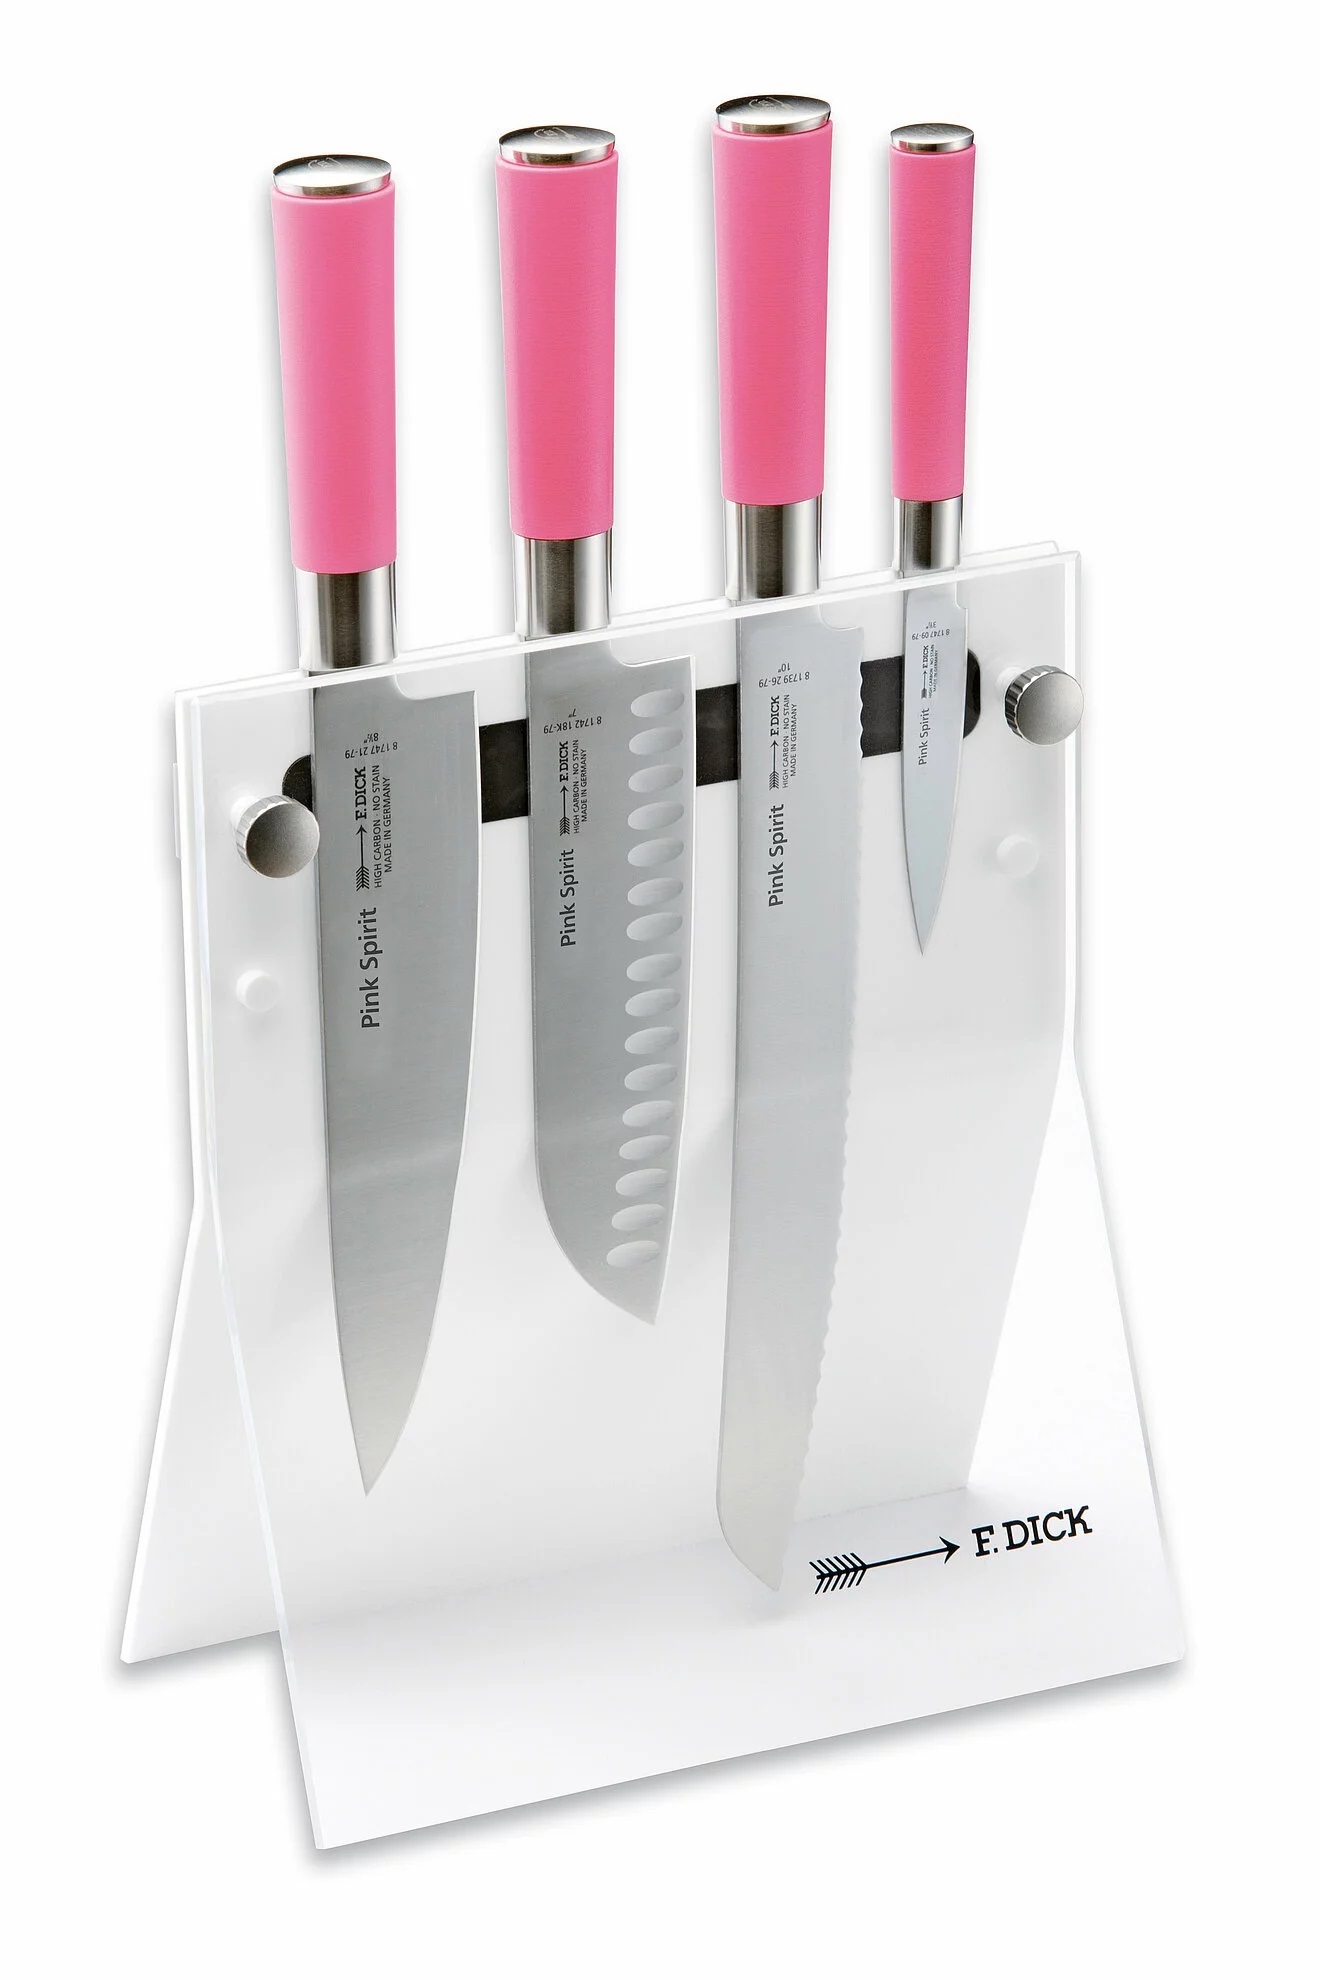 DICK Messerblock, Acryl, 4 Knives Pink Spirit 4-teilig, weiß